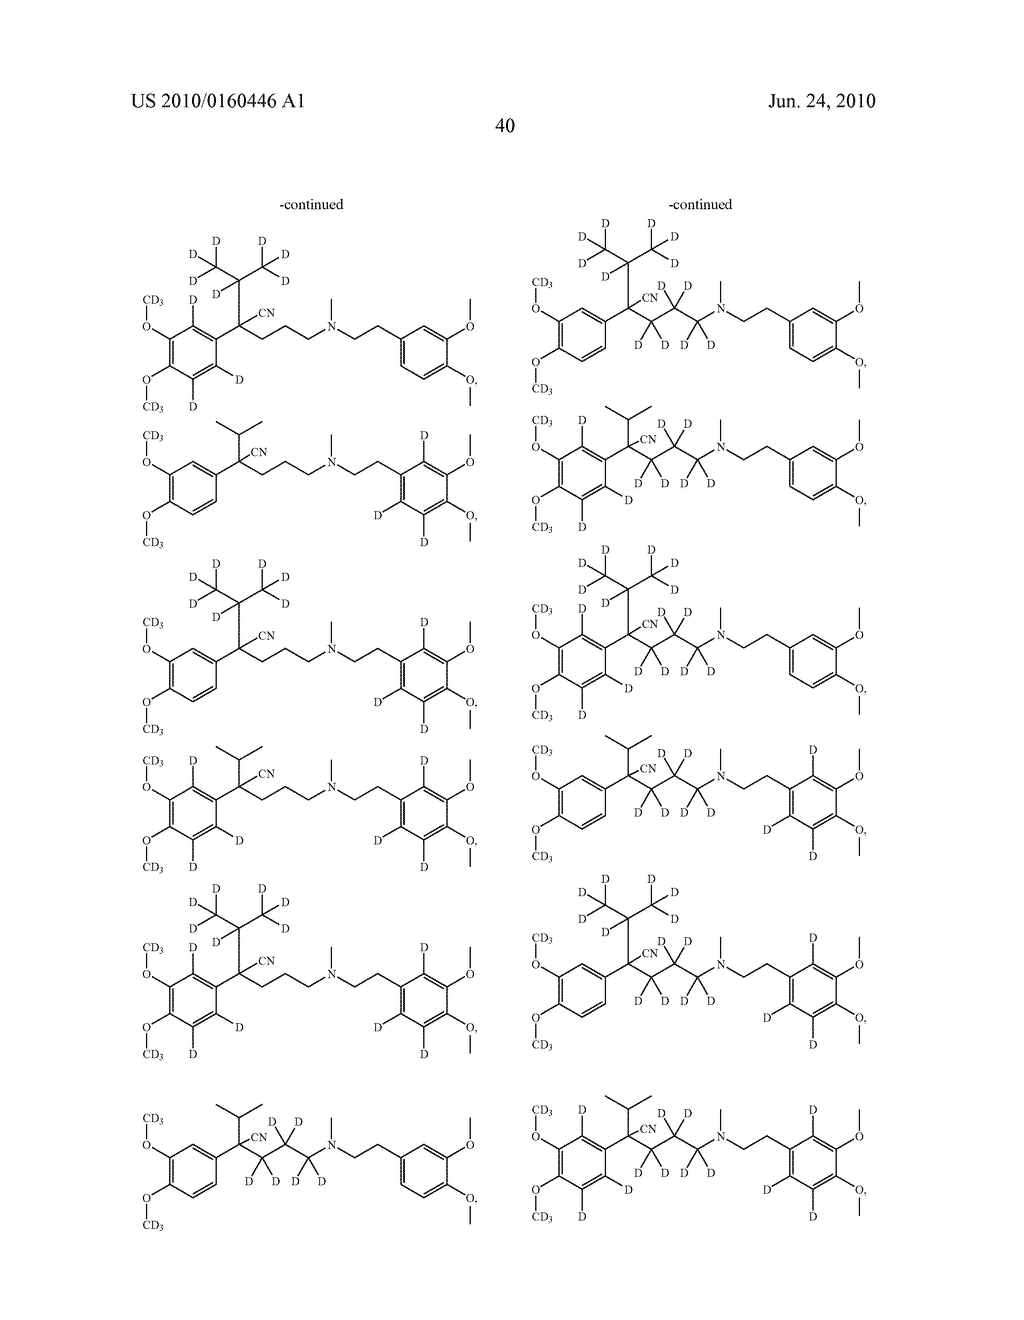 3,4-DIMETHOXYPHENETHYLAMINE MODULATORS OF L-TYPE CALCIUM CHANNEL - diagram, schematic, and image 41